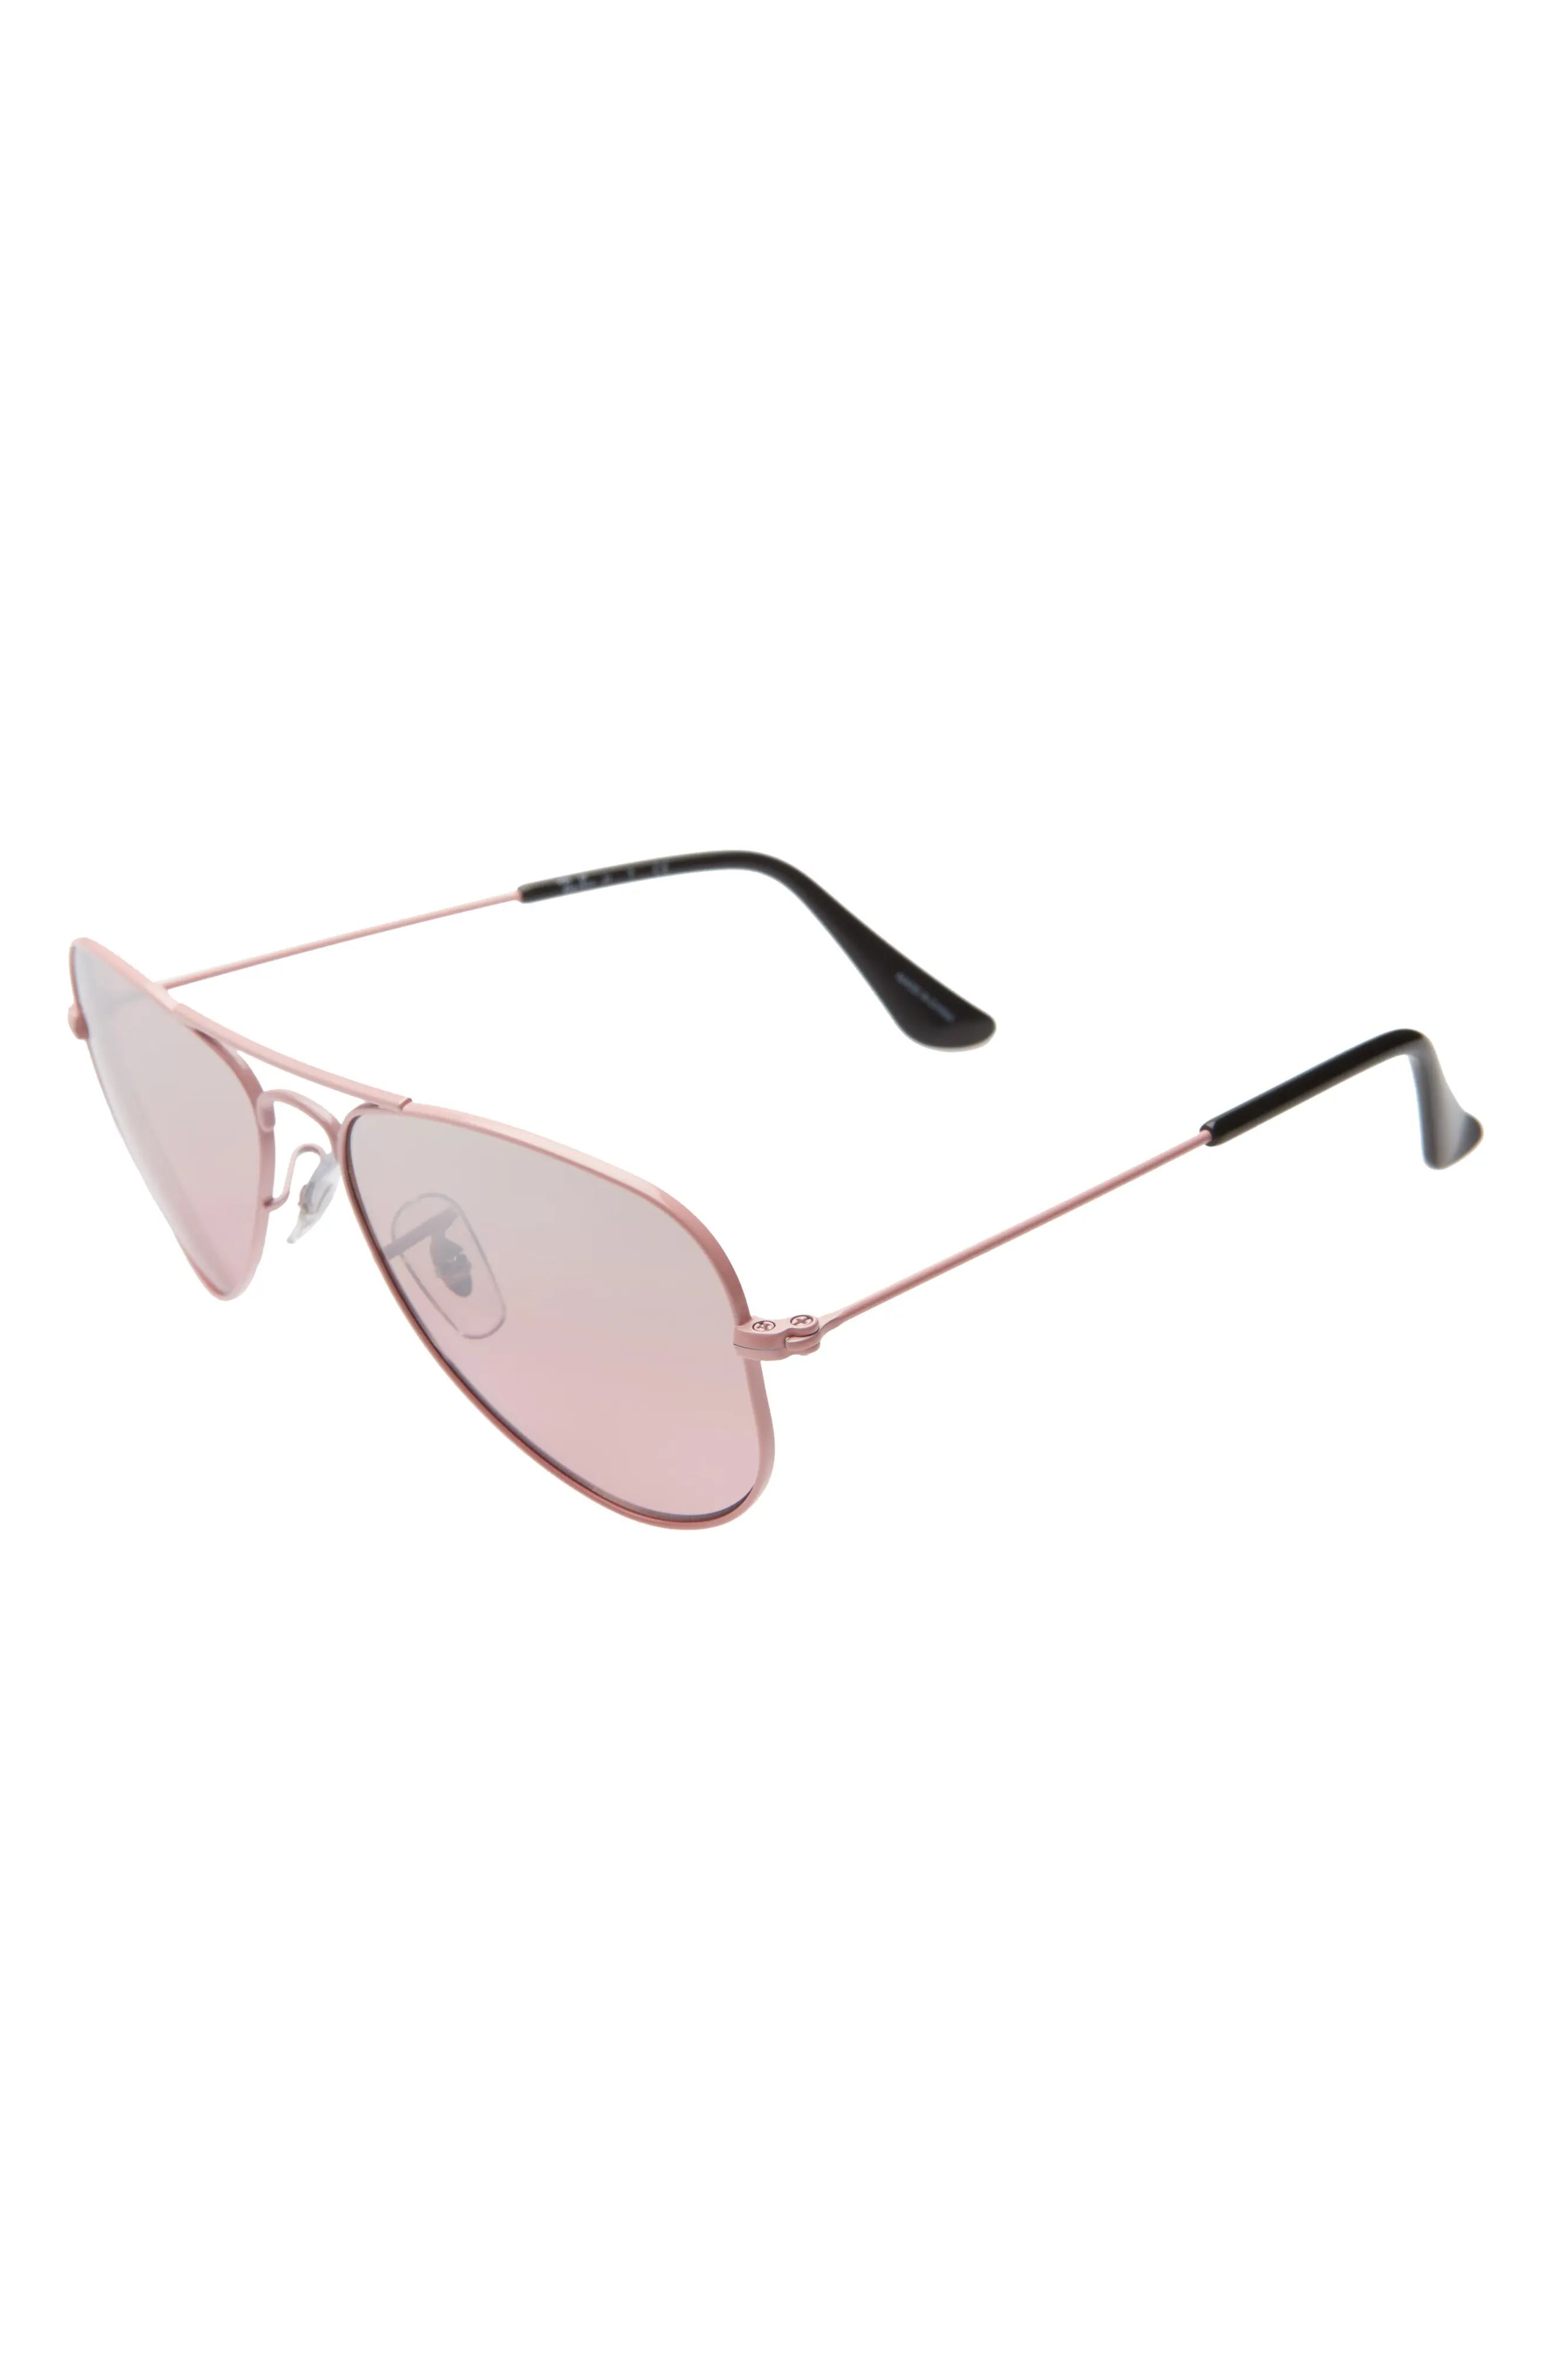 Ray-Ban Junior 52mm Aviator Sunglasses - Pink/ Pink Gradient Mirror | Nordstrom